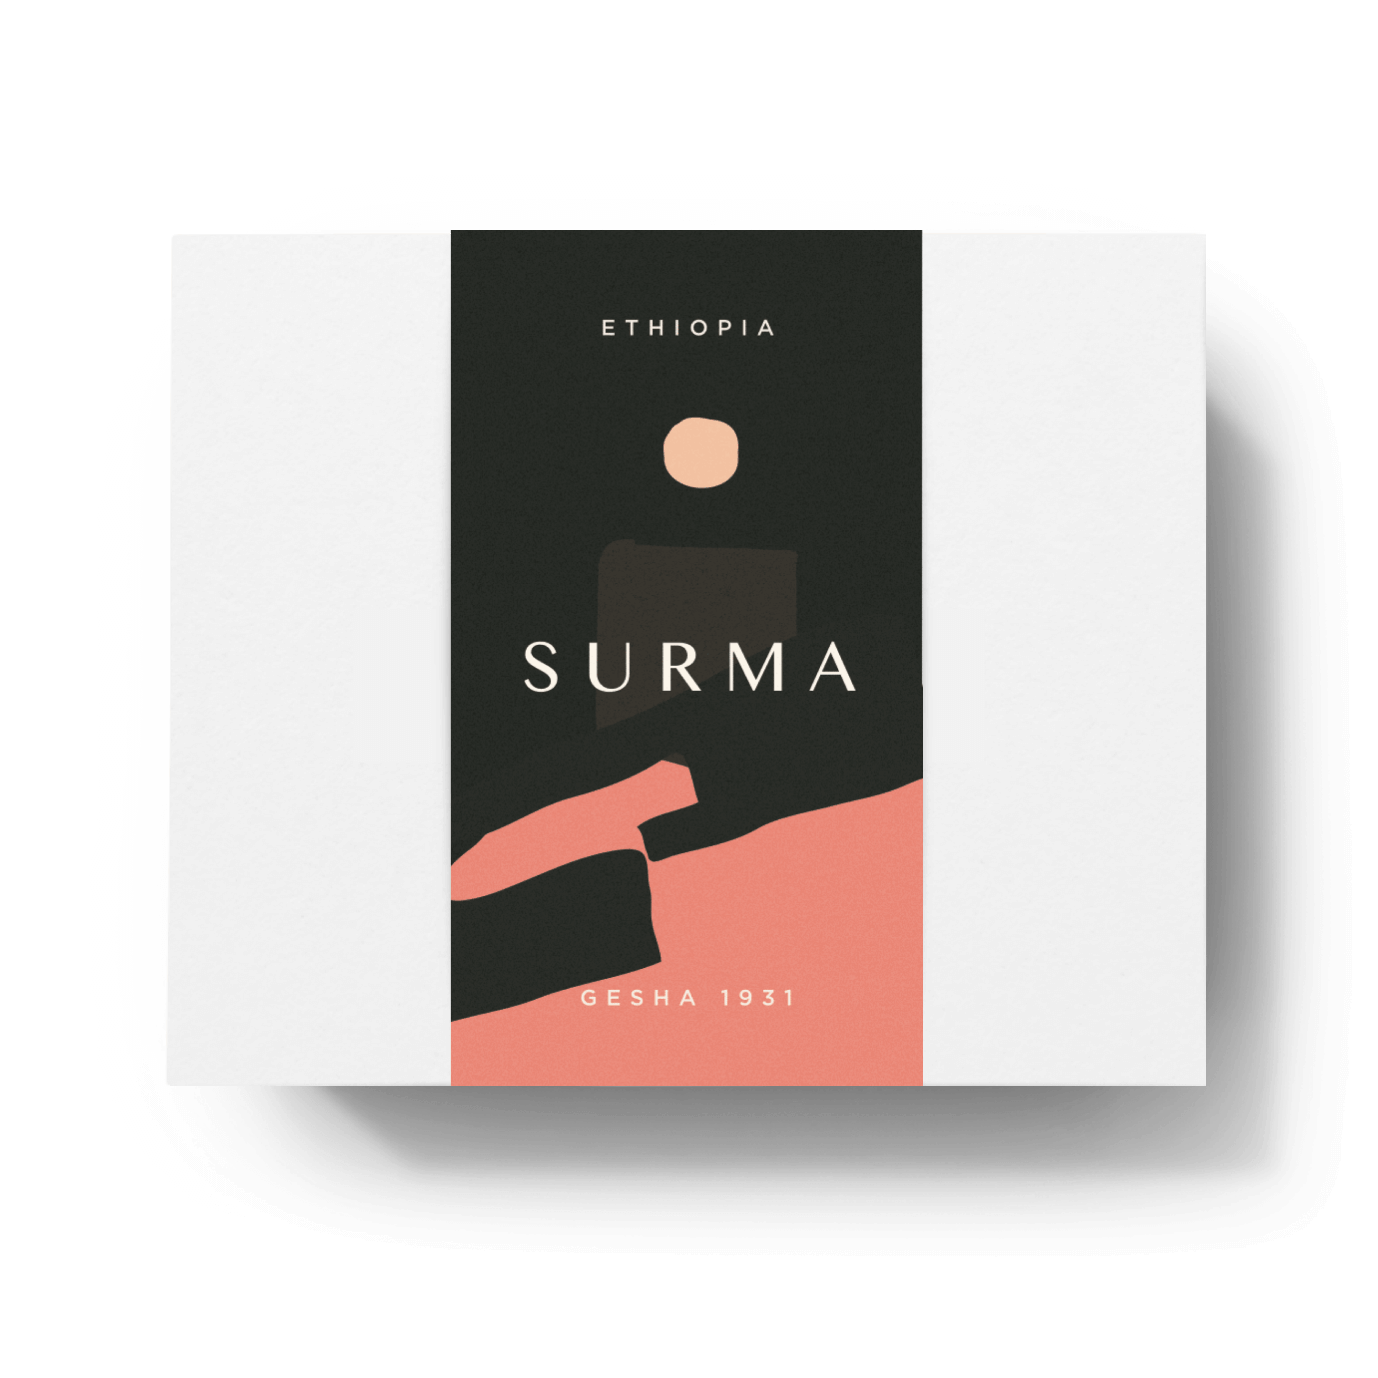 Pre-release: Surma